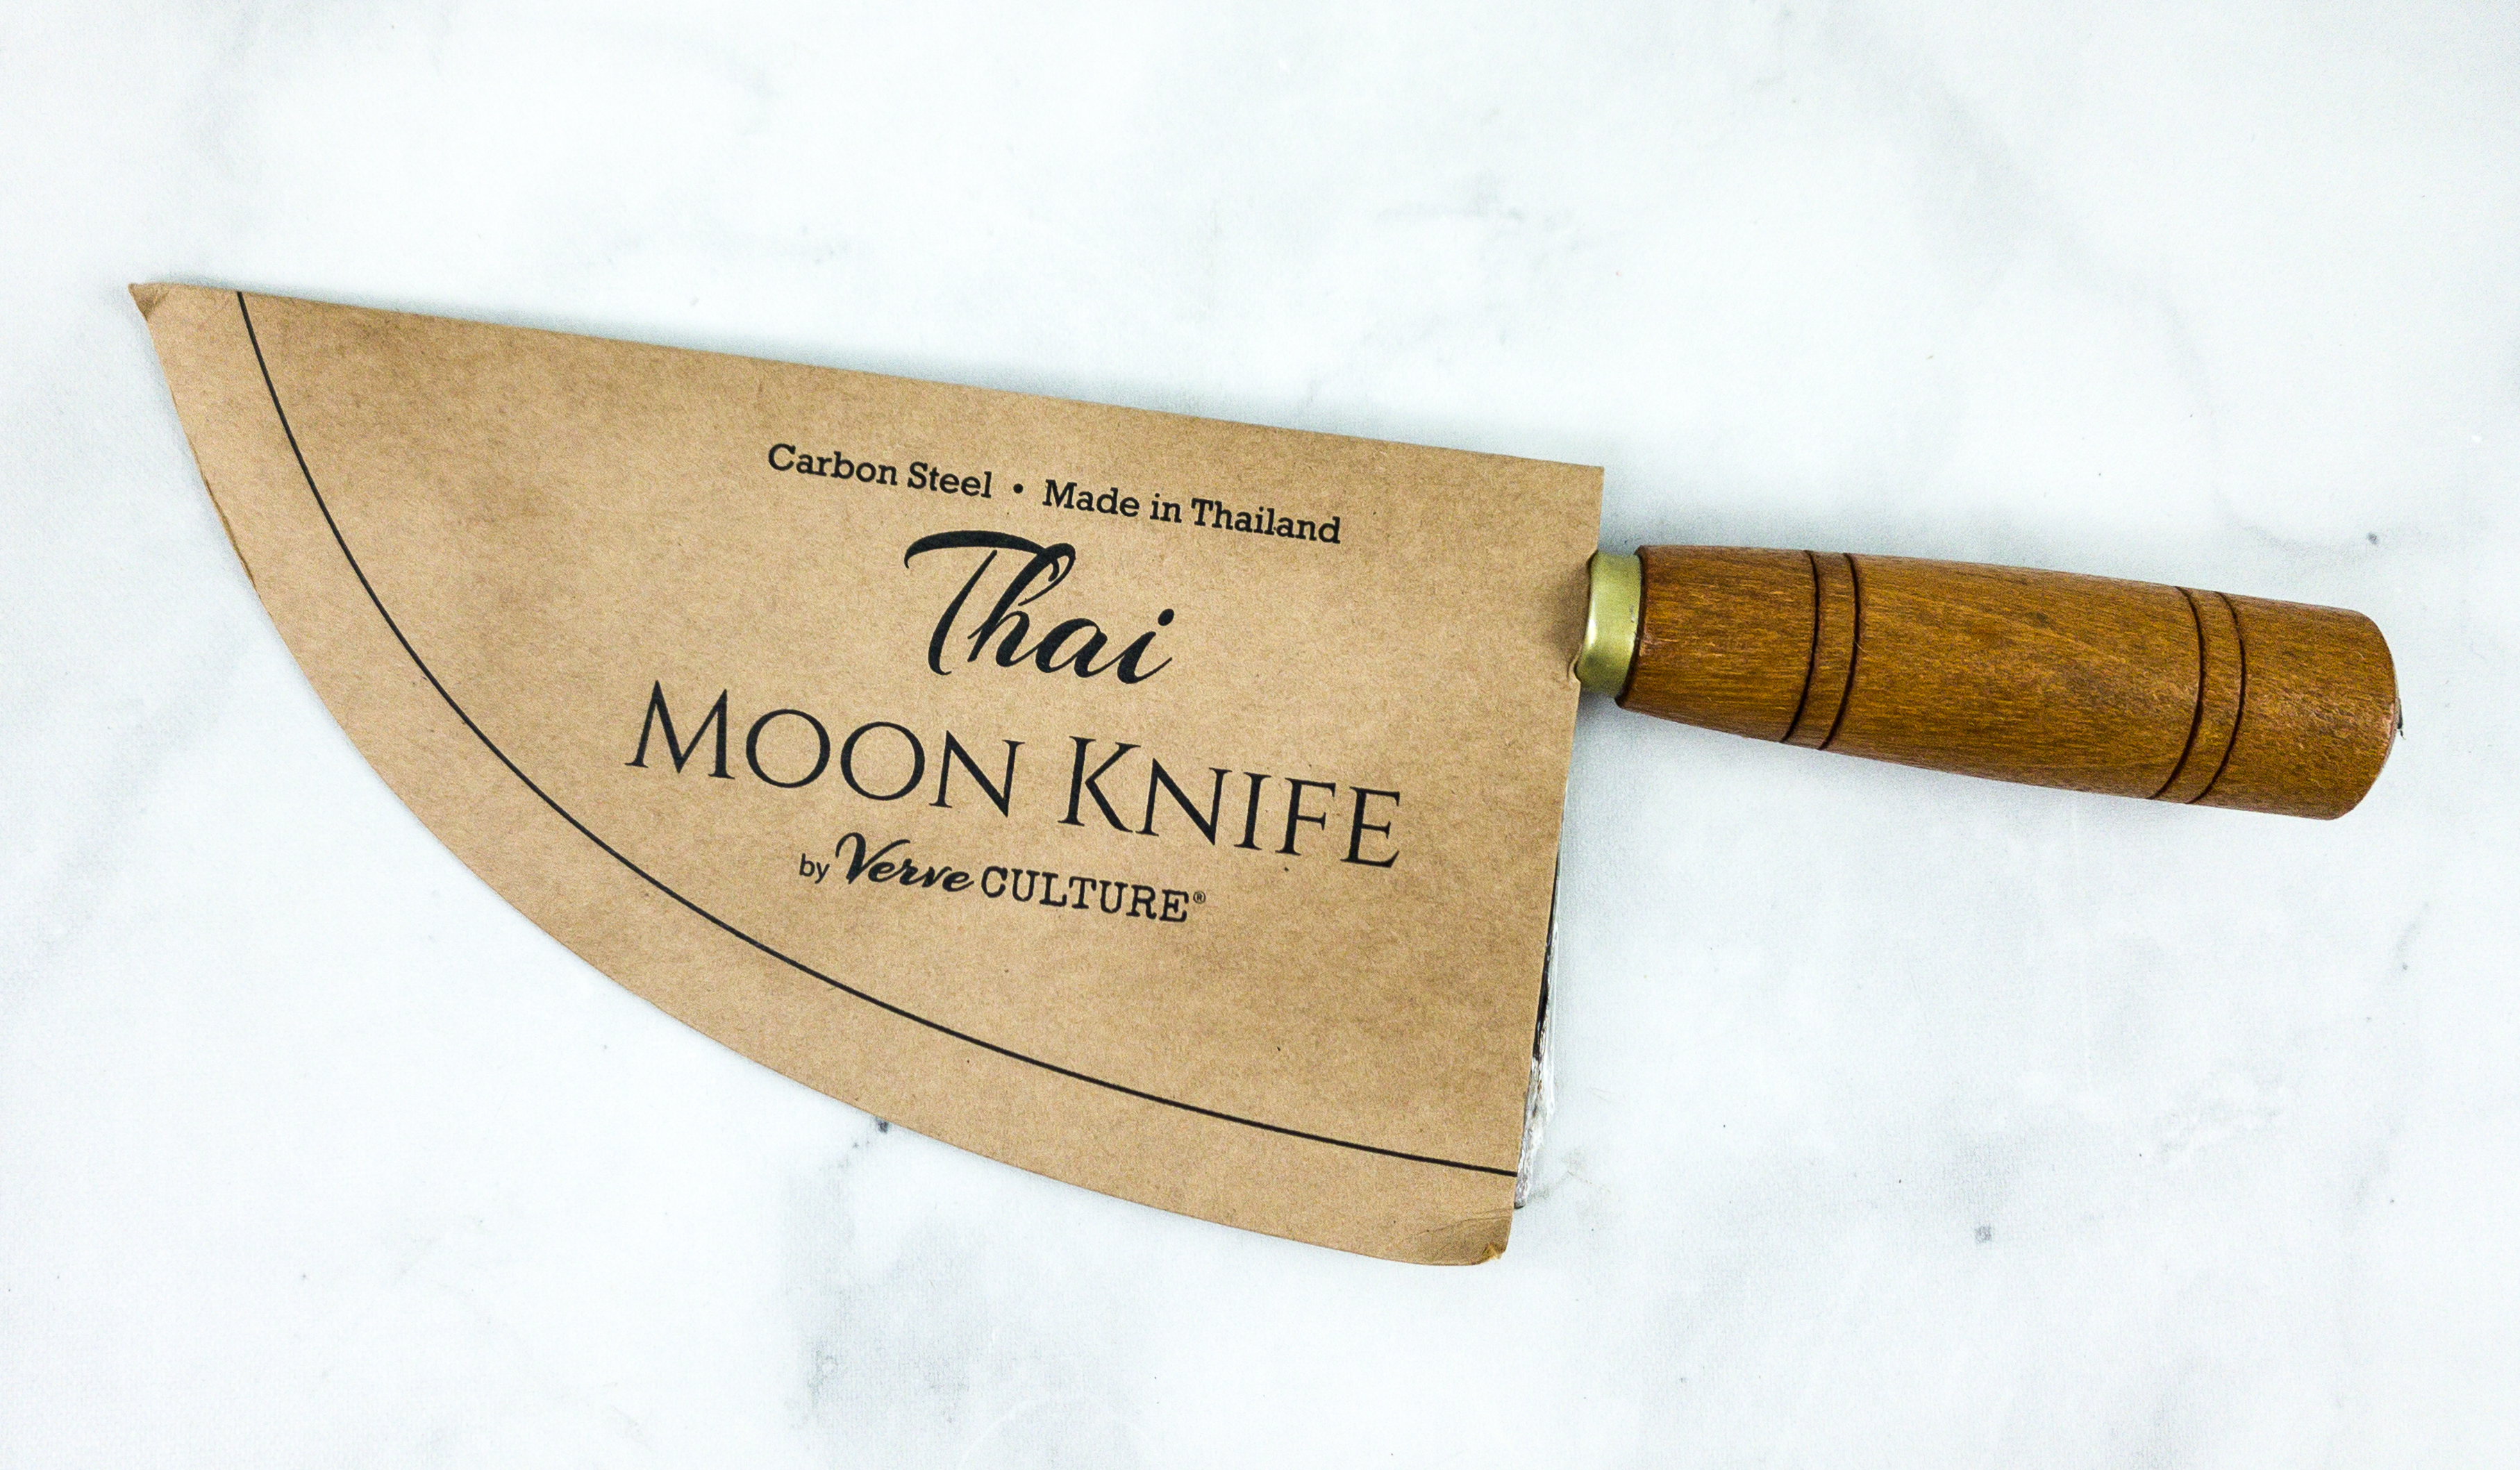 Verve Culture Thai Chef's Moon Knife